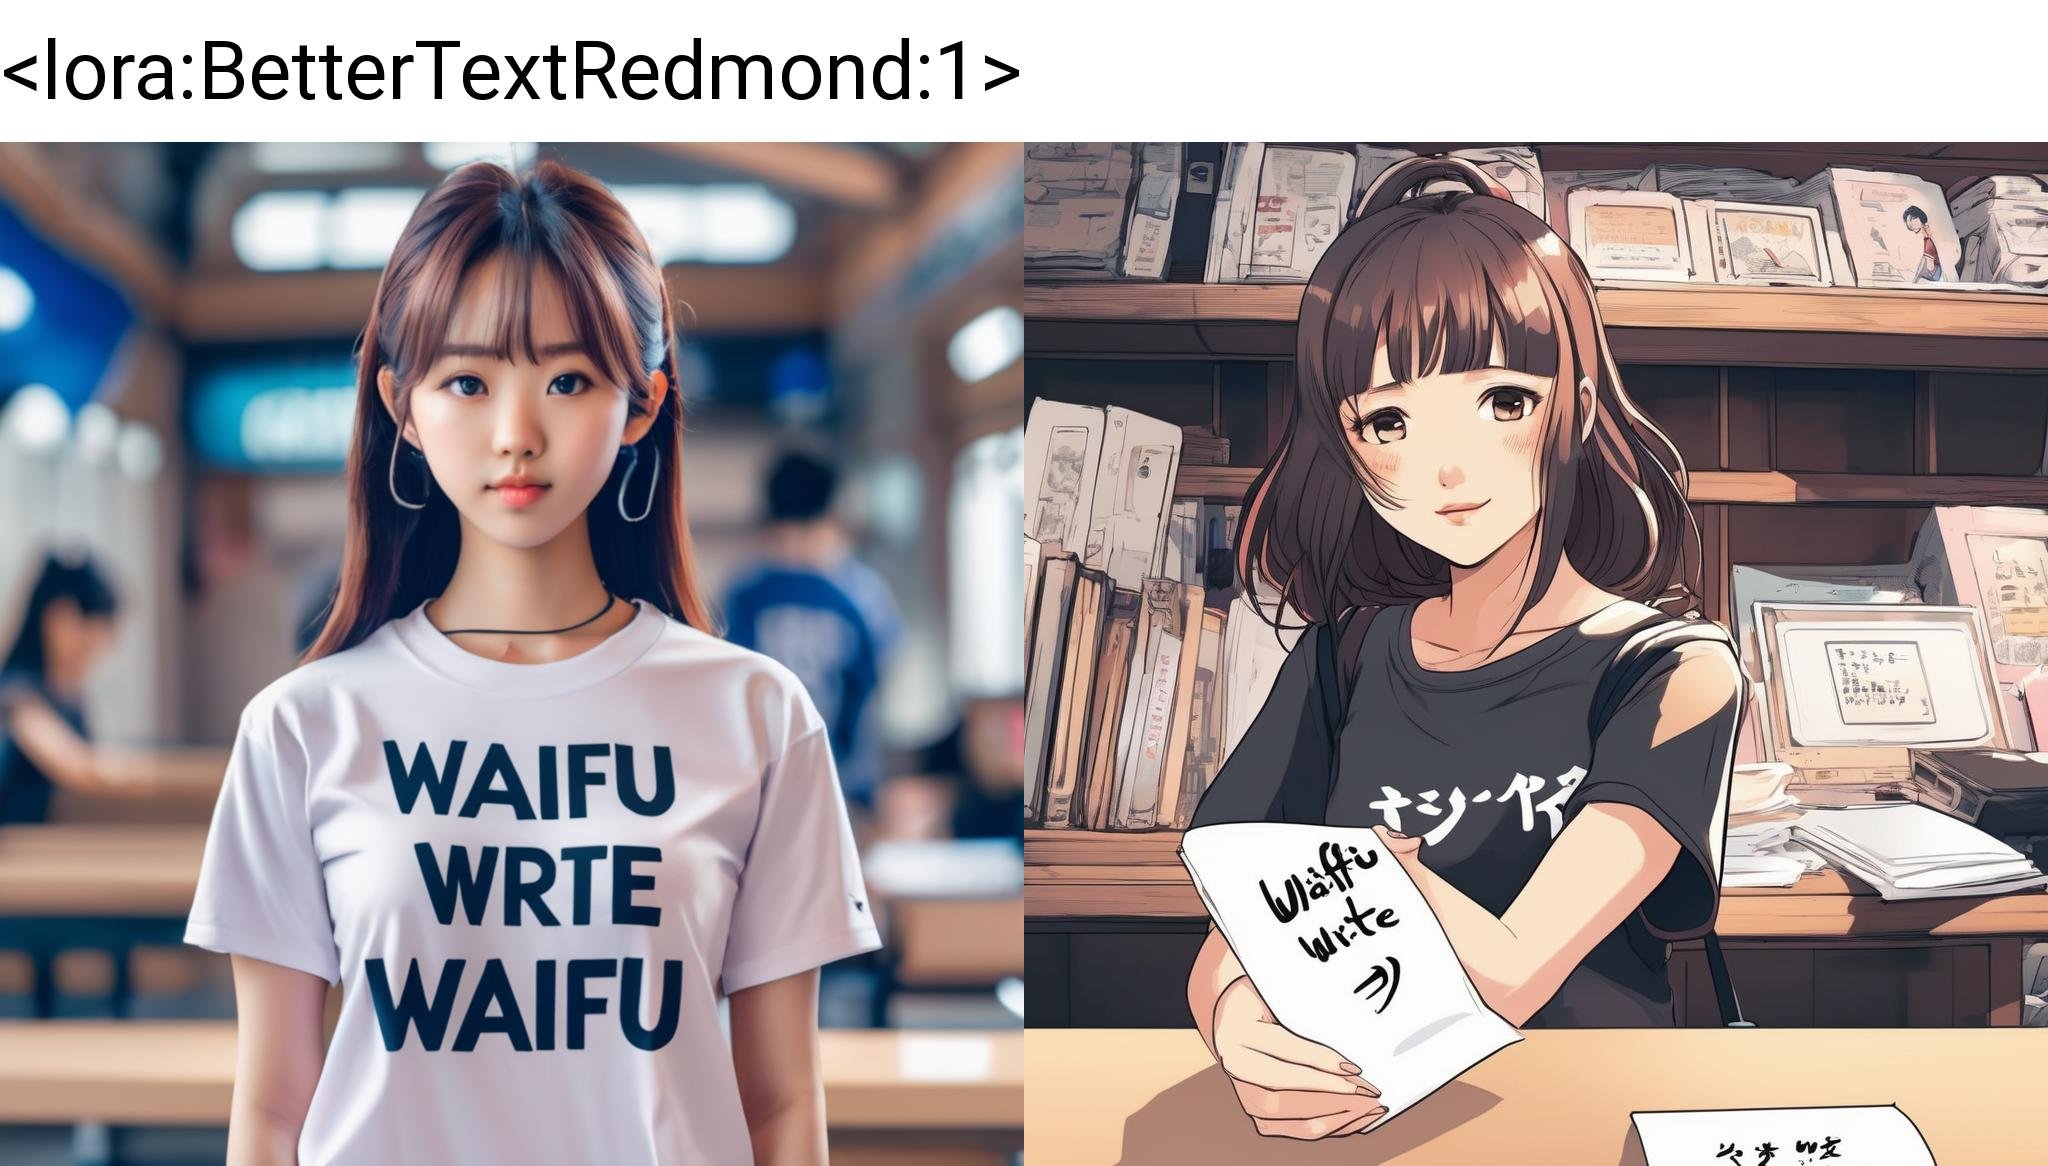 An asian  girl with a t-shirt that have "WAIFU" write on it, "WAIFU" write,  anime style, anime  <lora:BetterTextRedmond:1>